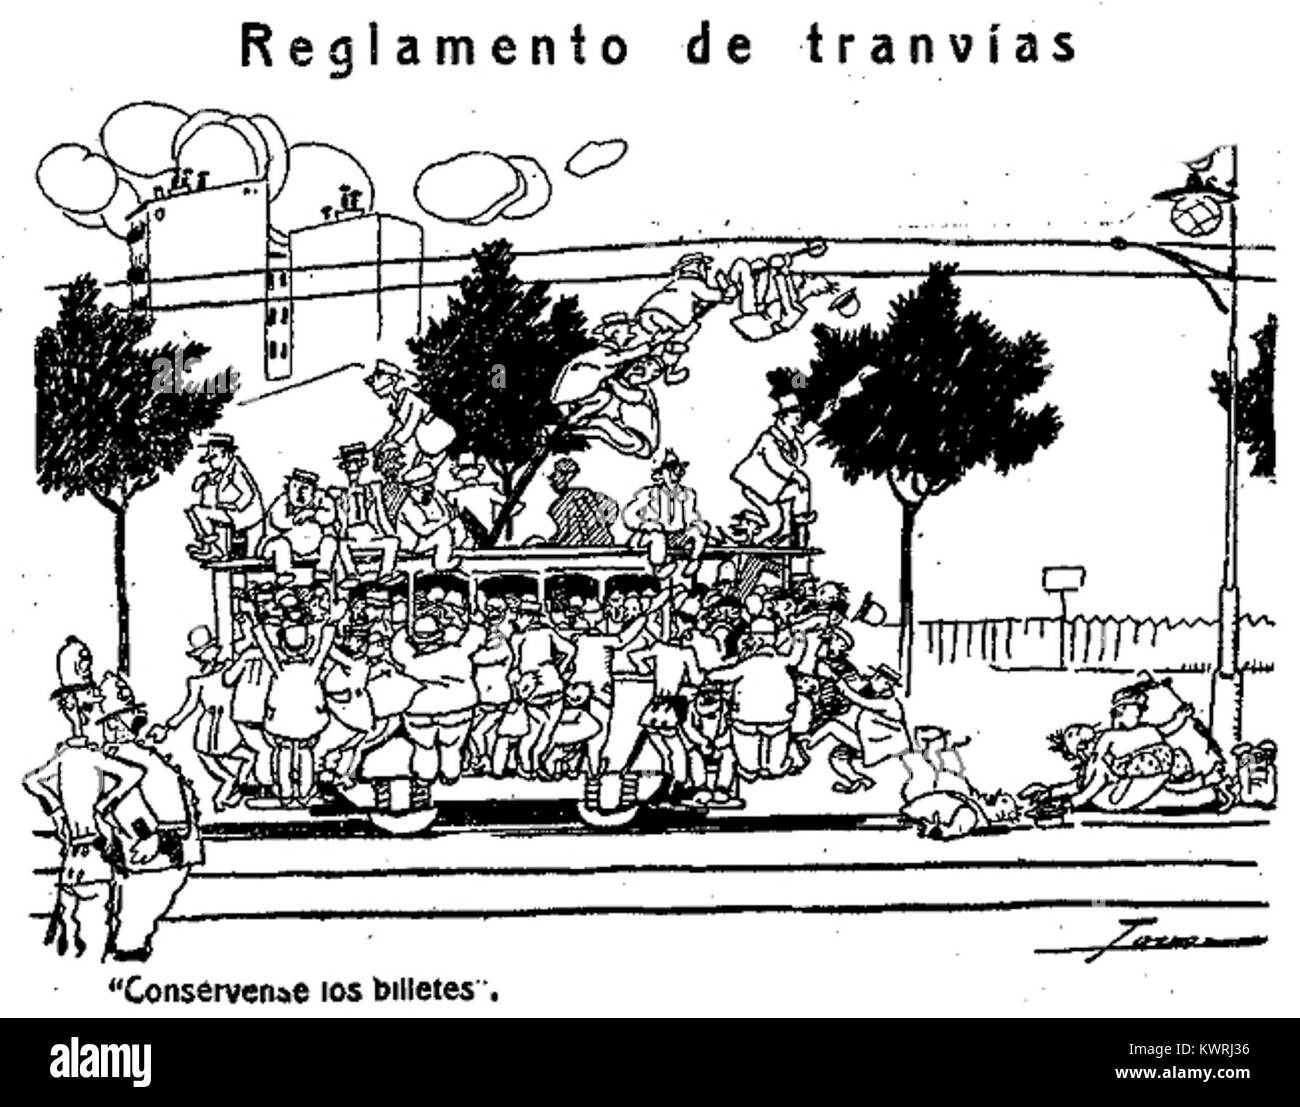 Reglamento de tranvías, de Tovar Foto de stock